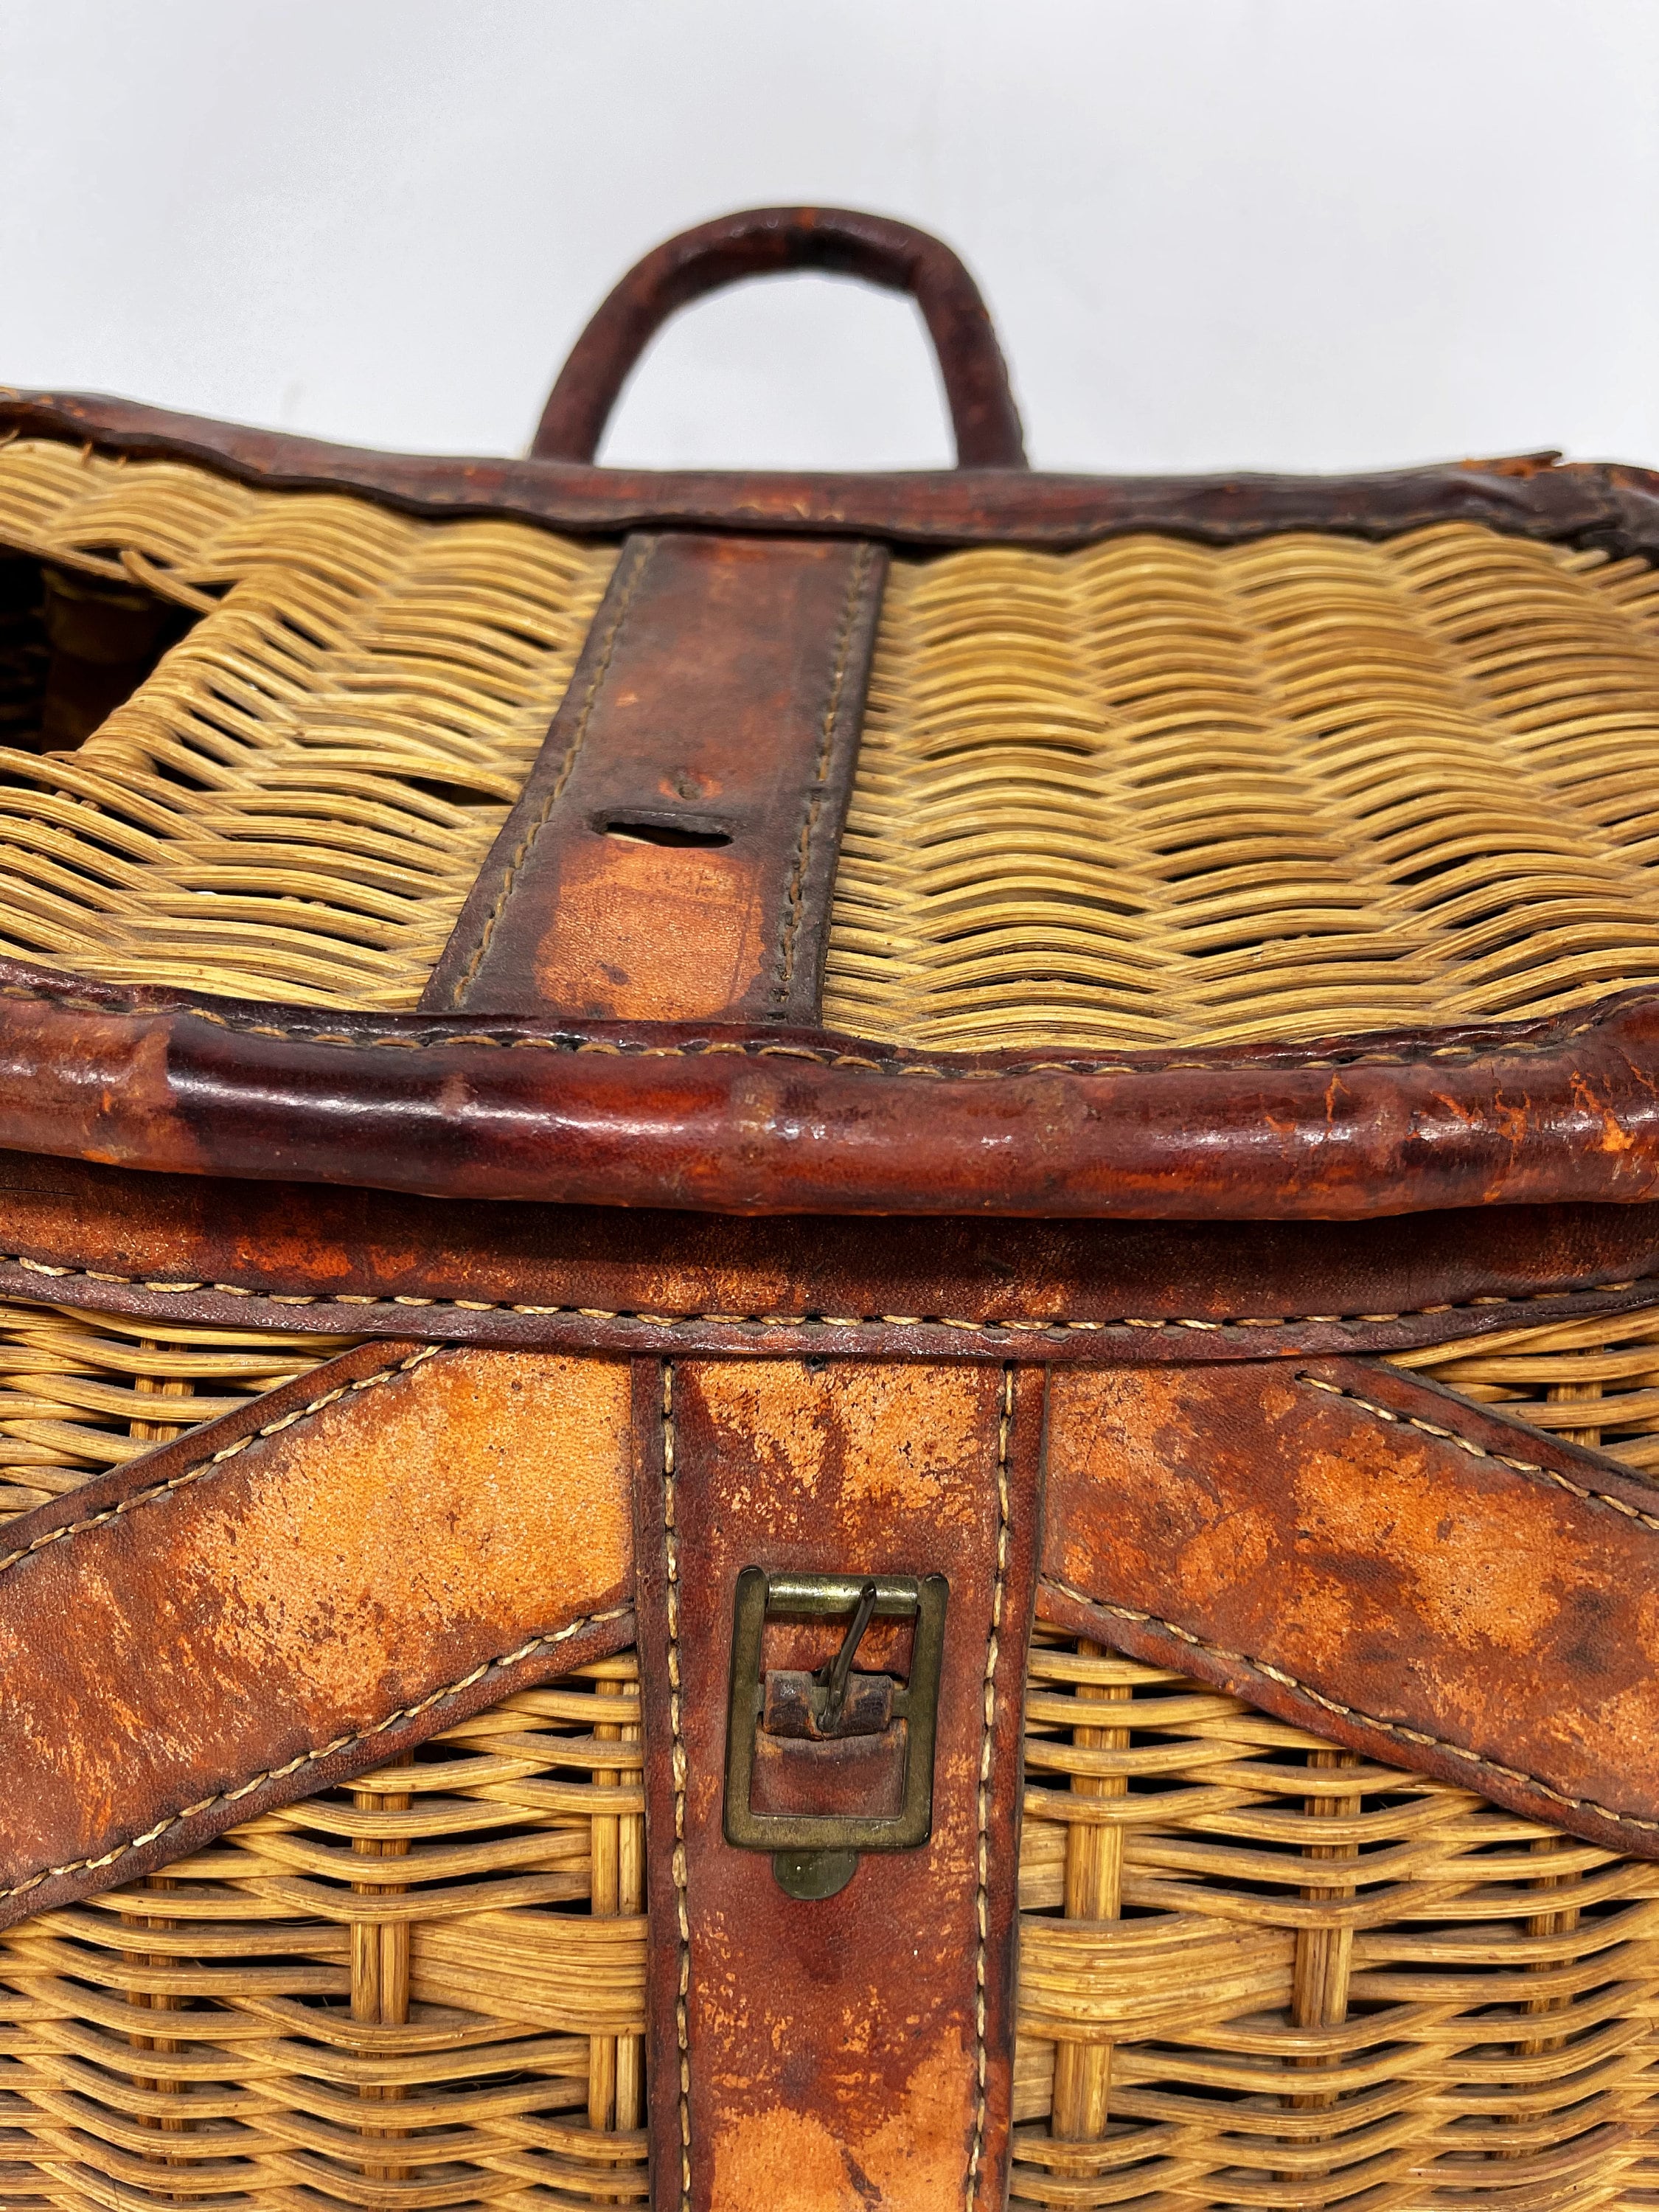 Vintage Fishing Creel, Wicker Basket, Rustic Cabin and Lodge